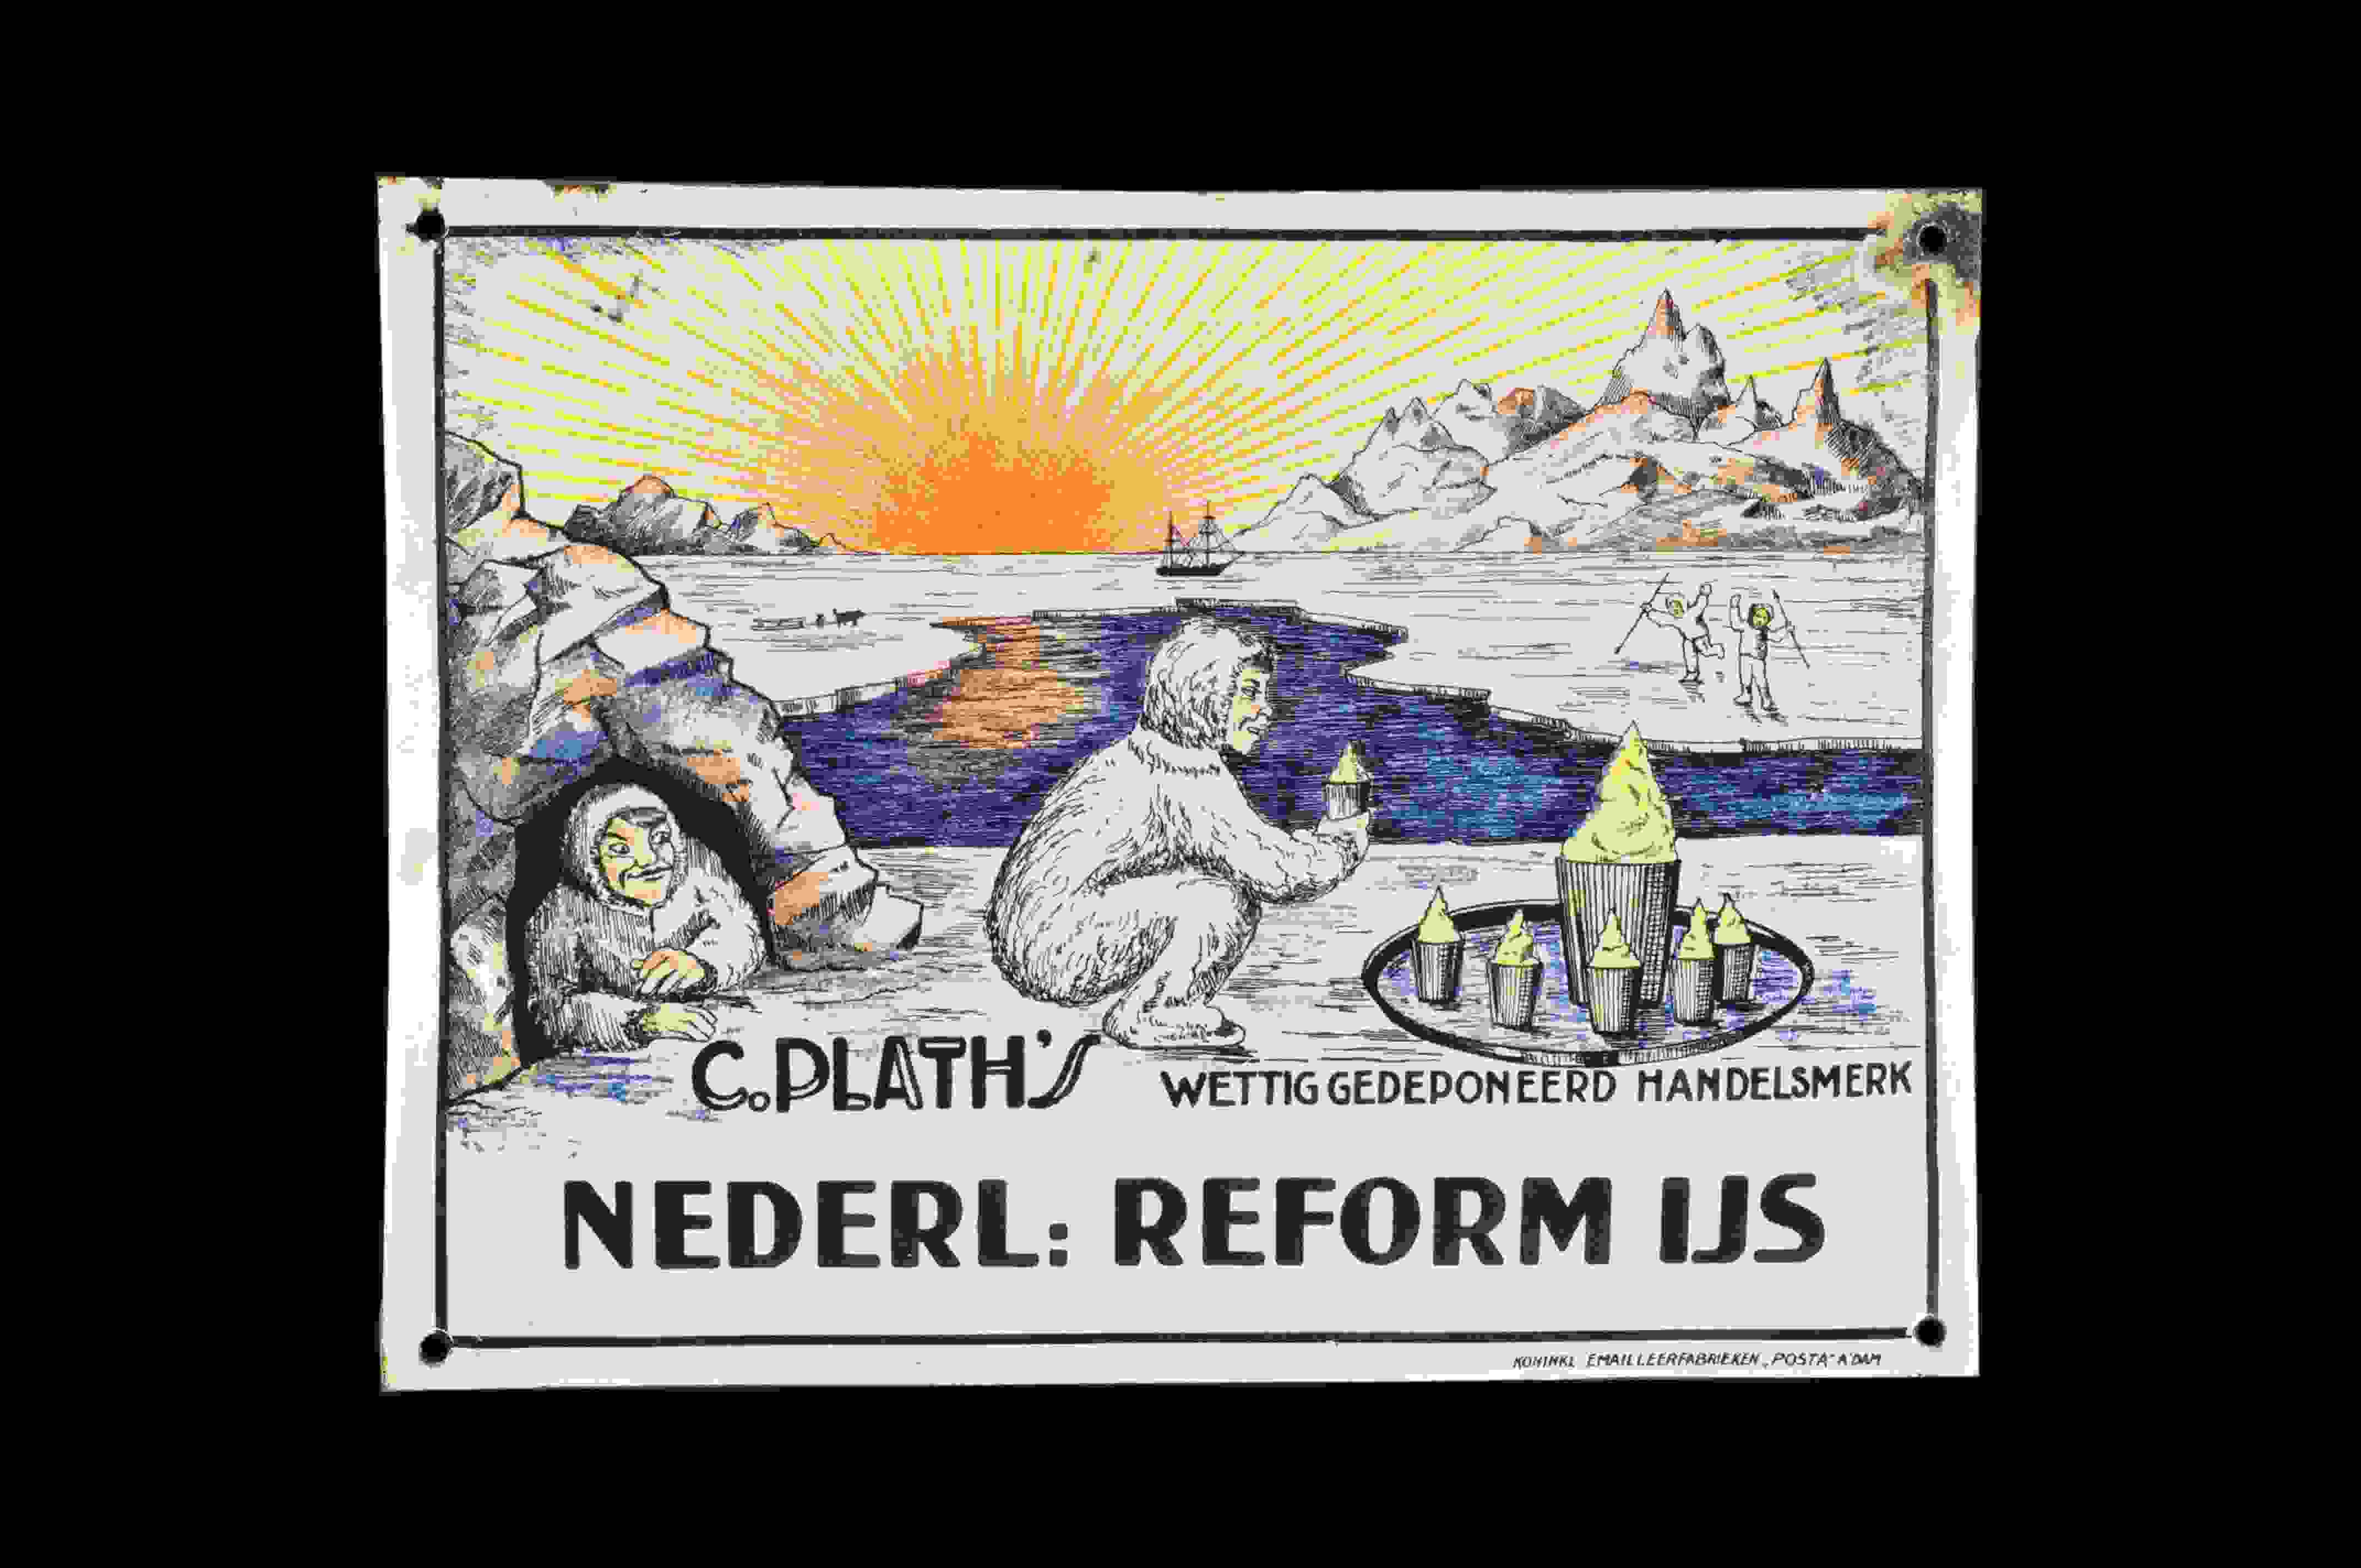 C. Plath's Reform Ijs 